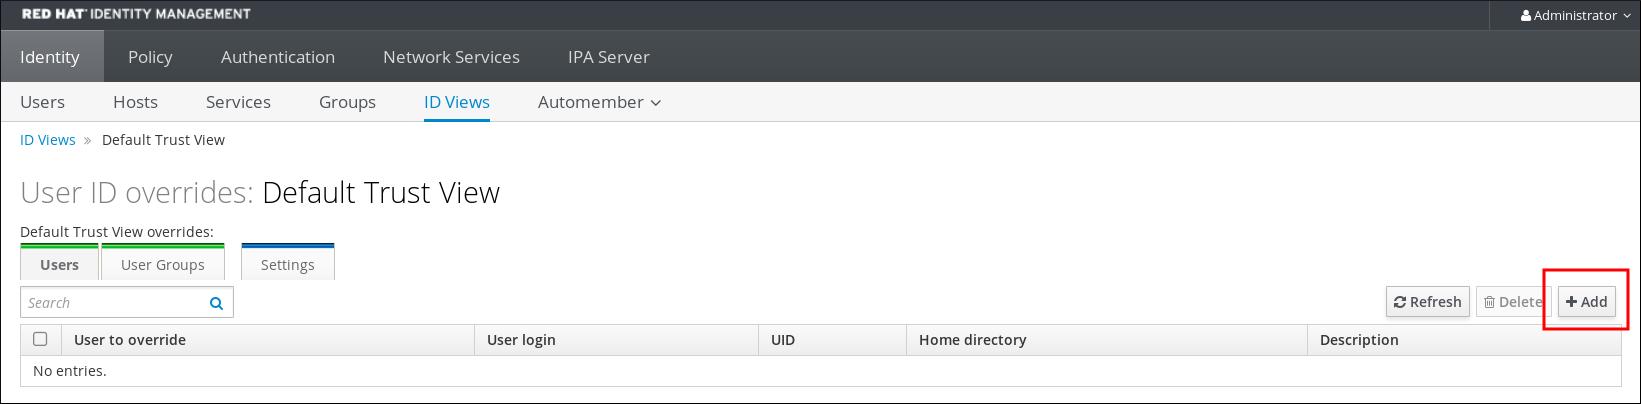 Adding a New User ID Override in the IdM Web UI